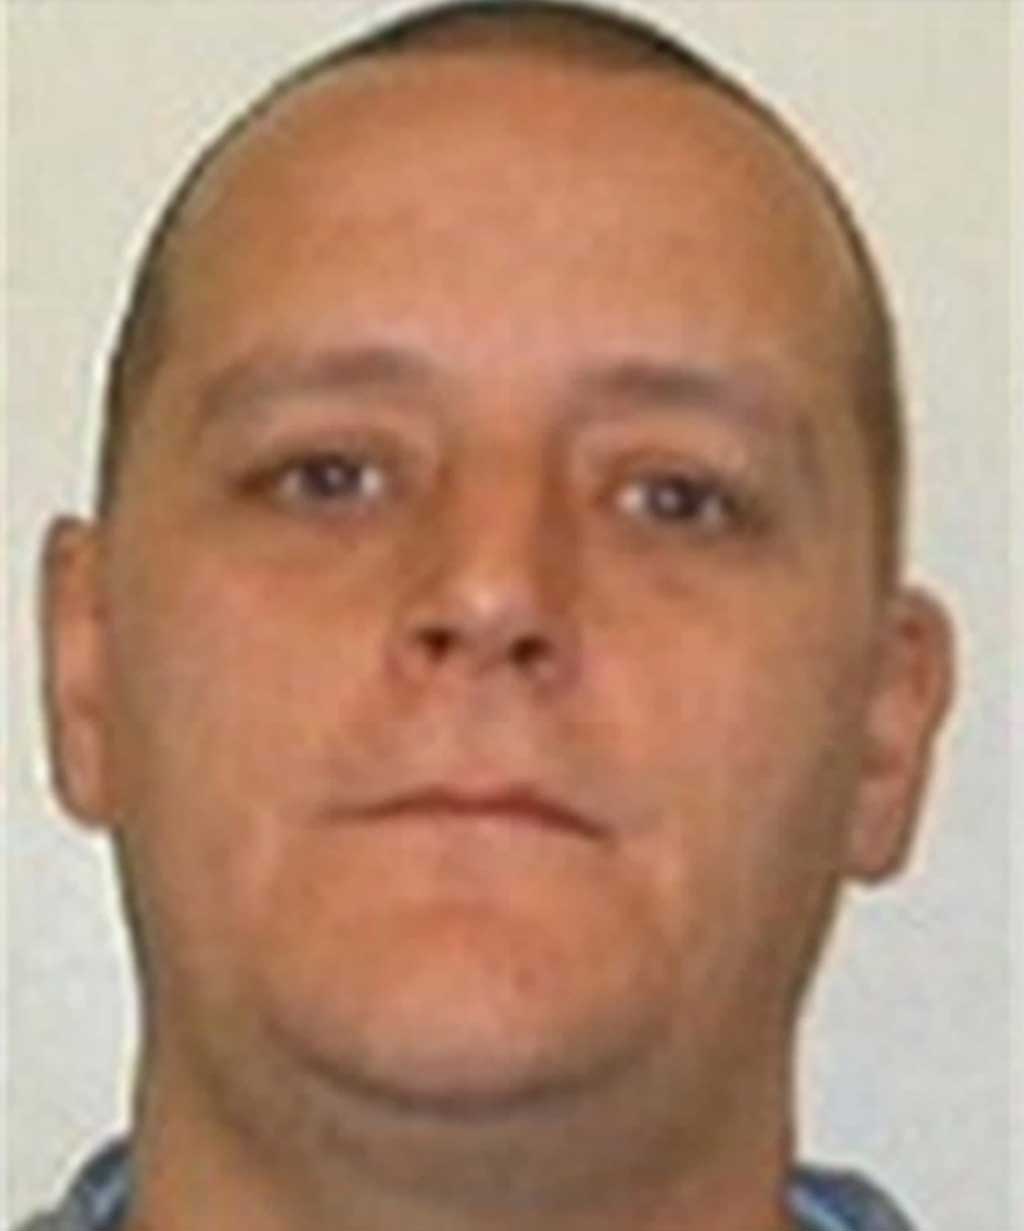 Convicted rapist Adam Mark has escaped from Leyhill prison